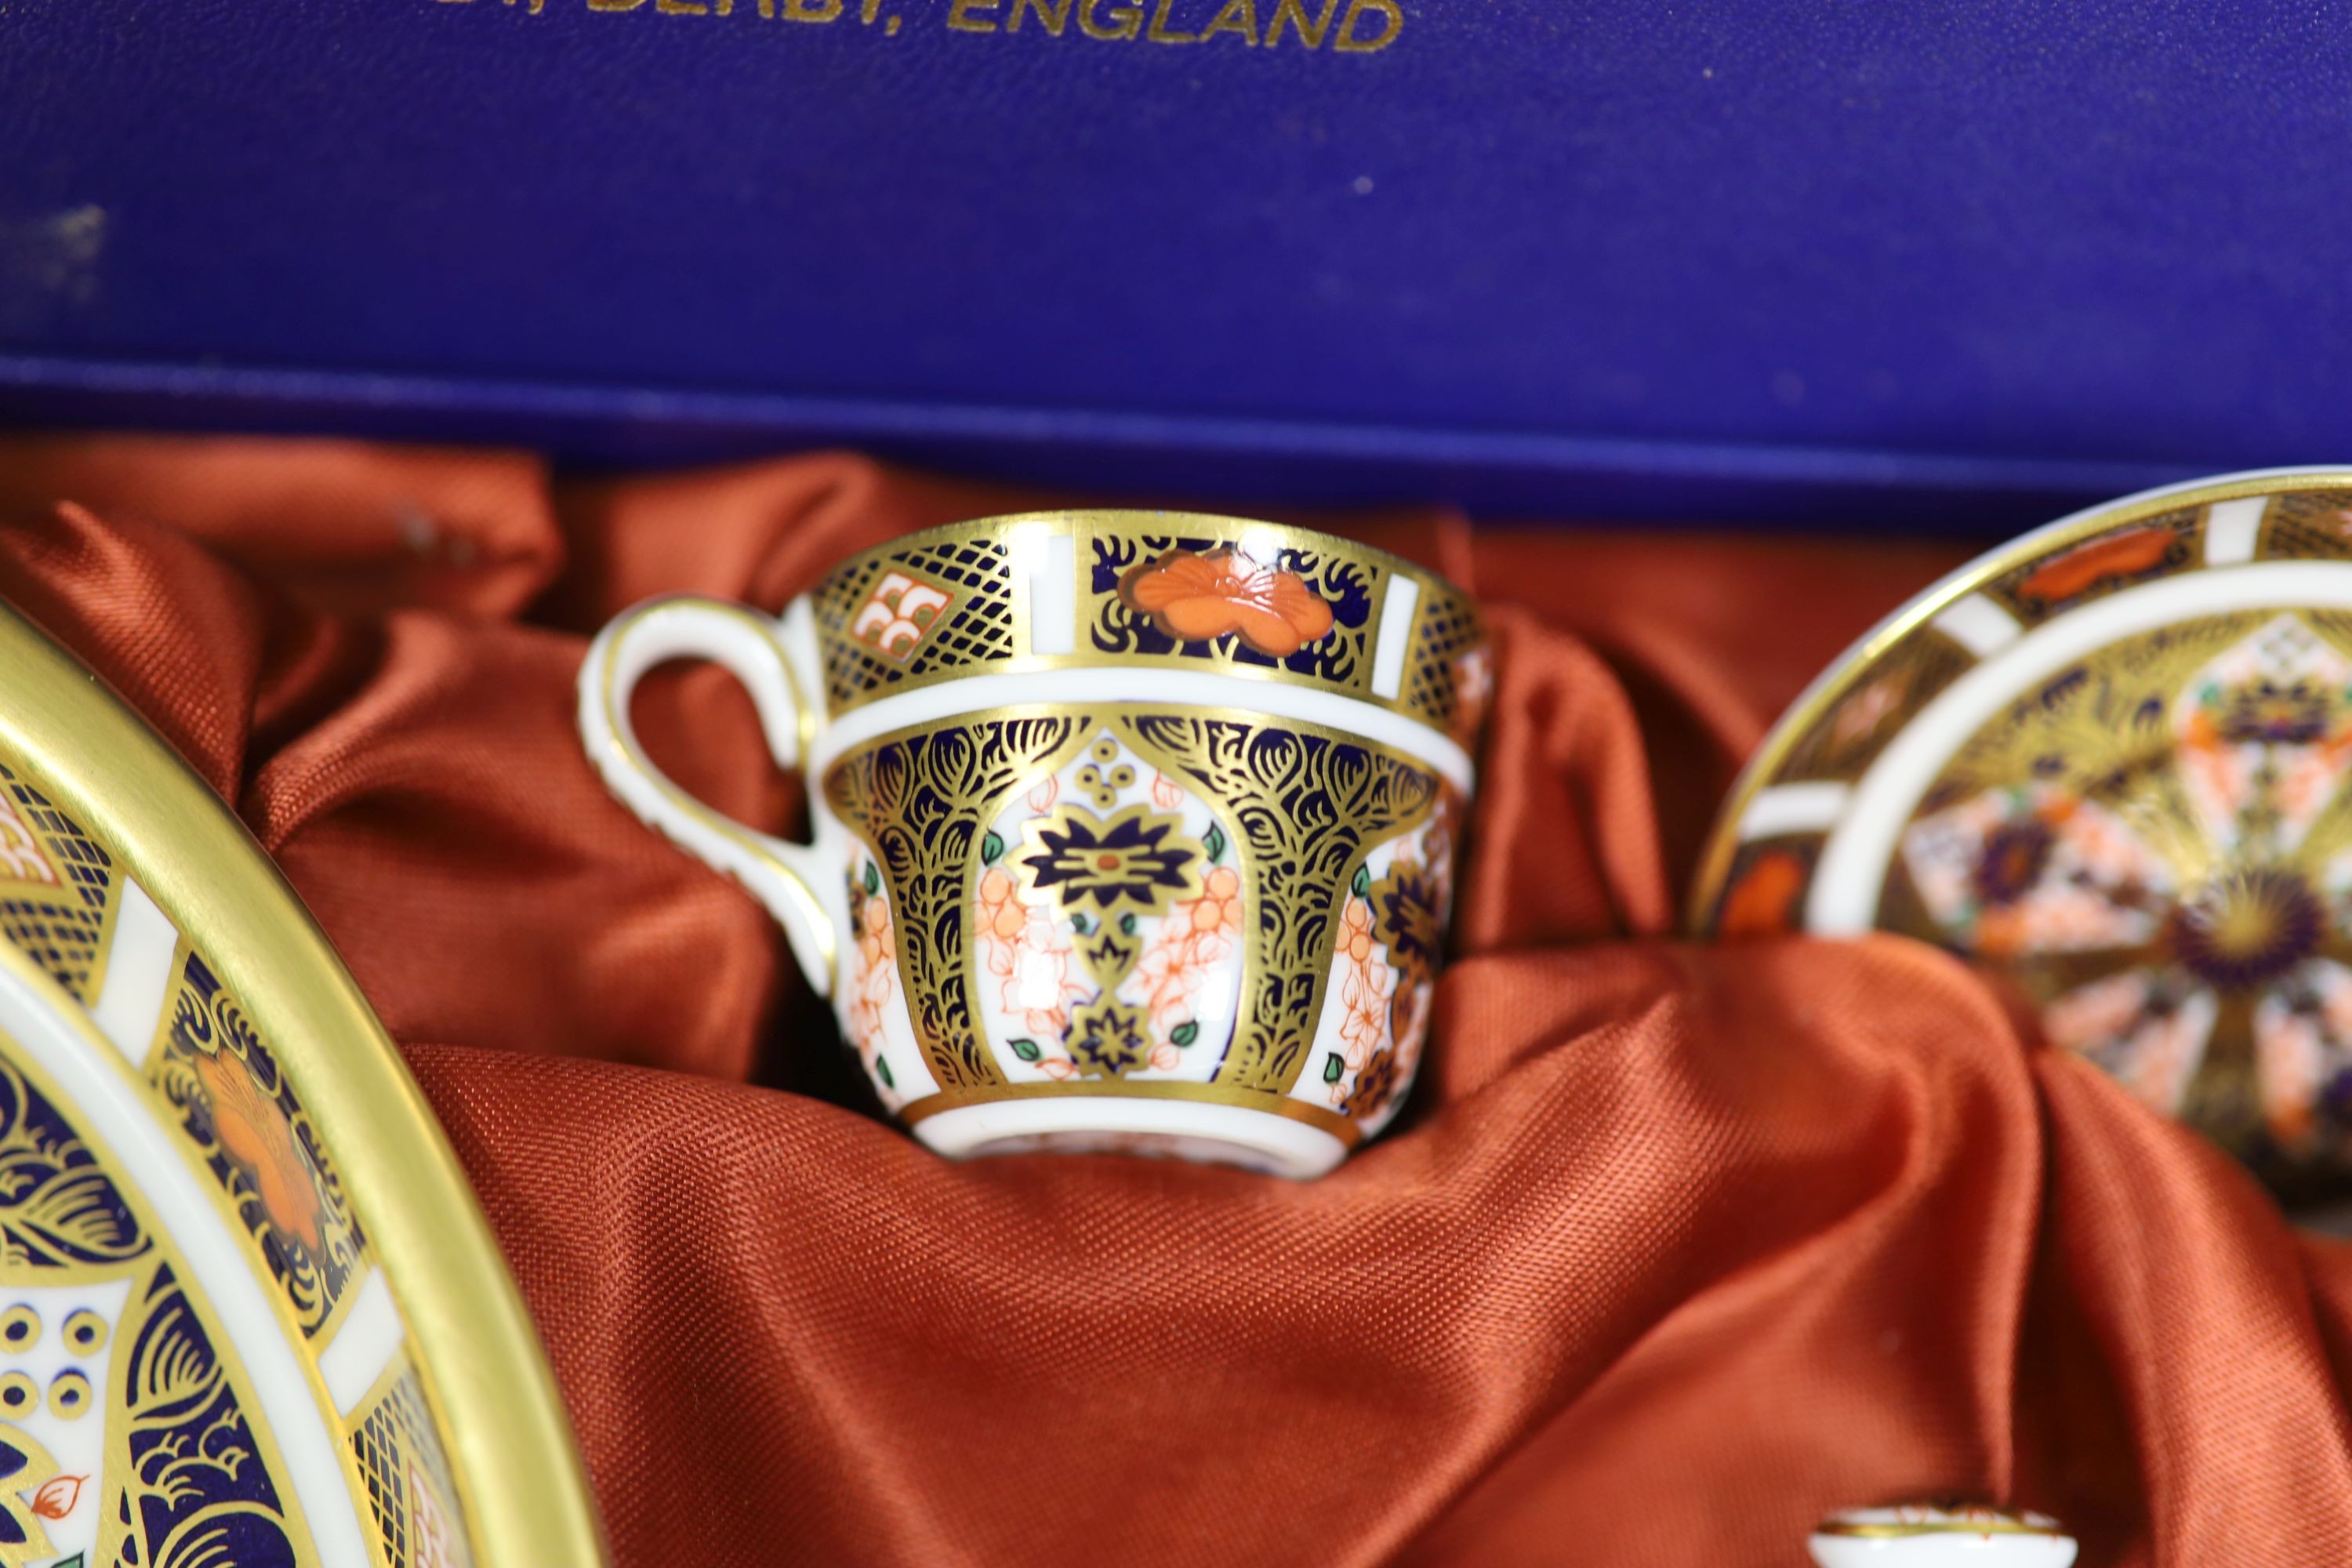 A Royal Crown Derby 'Old Imari' pattern miniature tea service, boxed